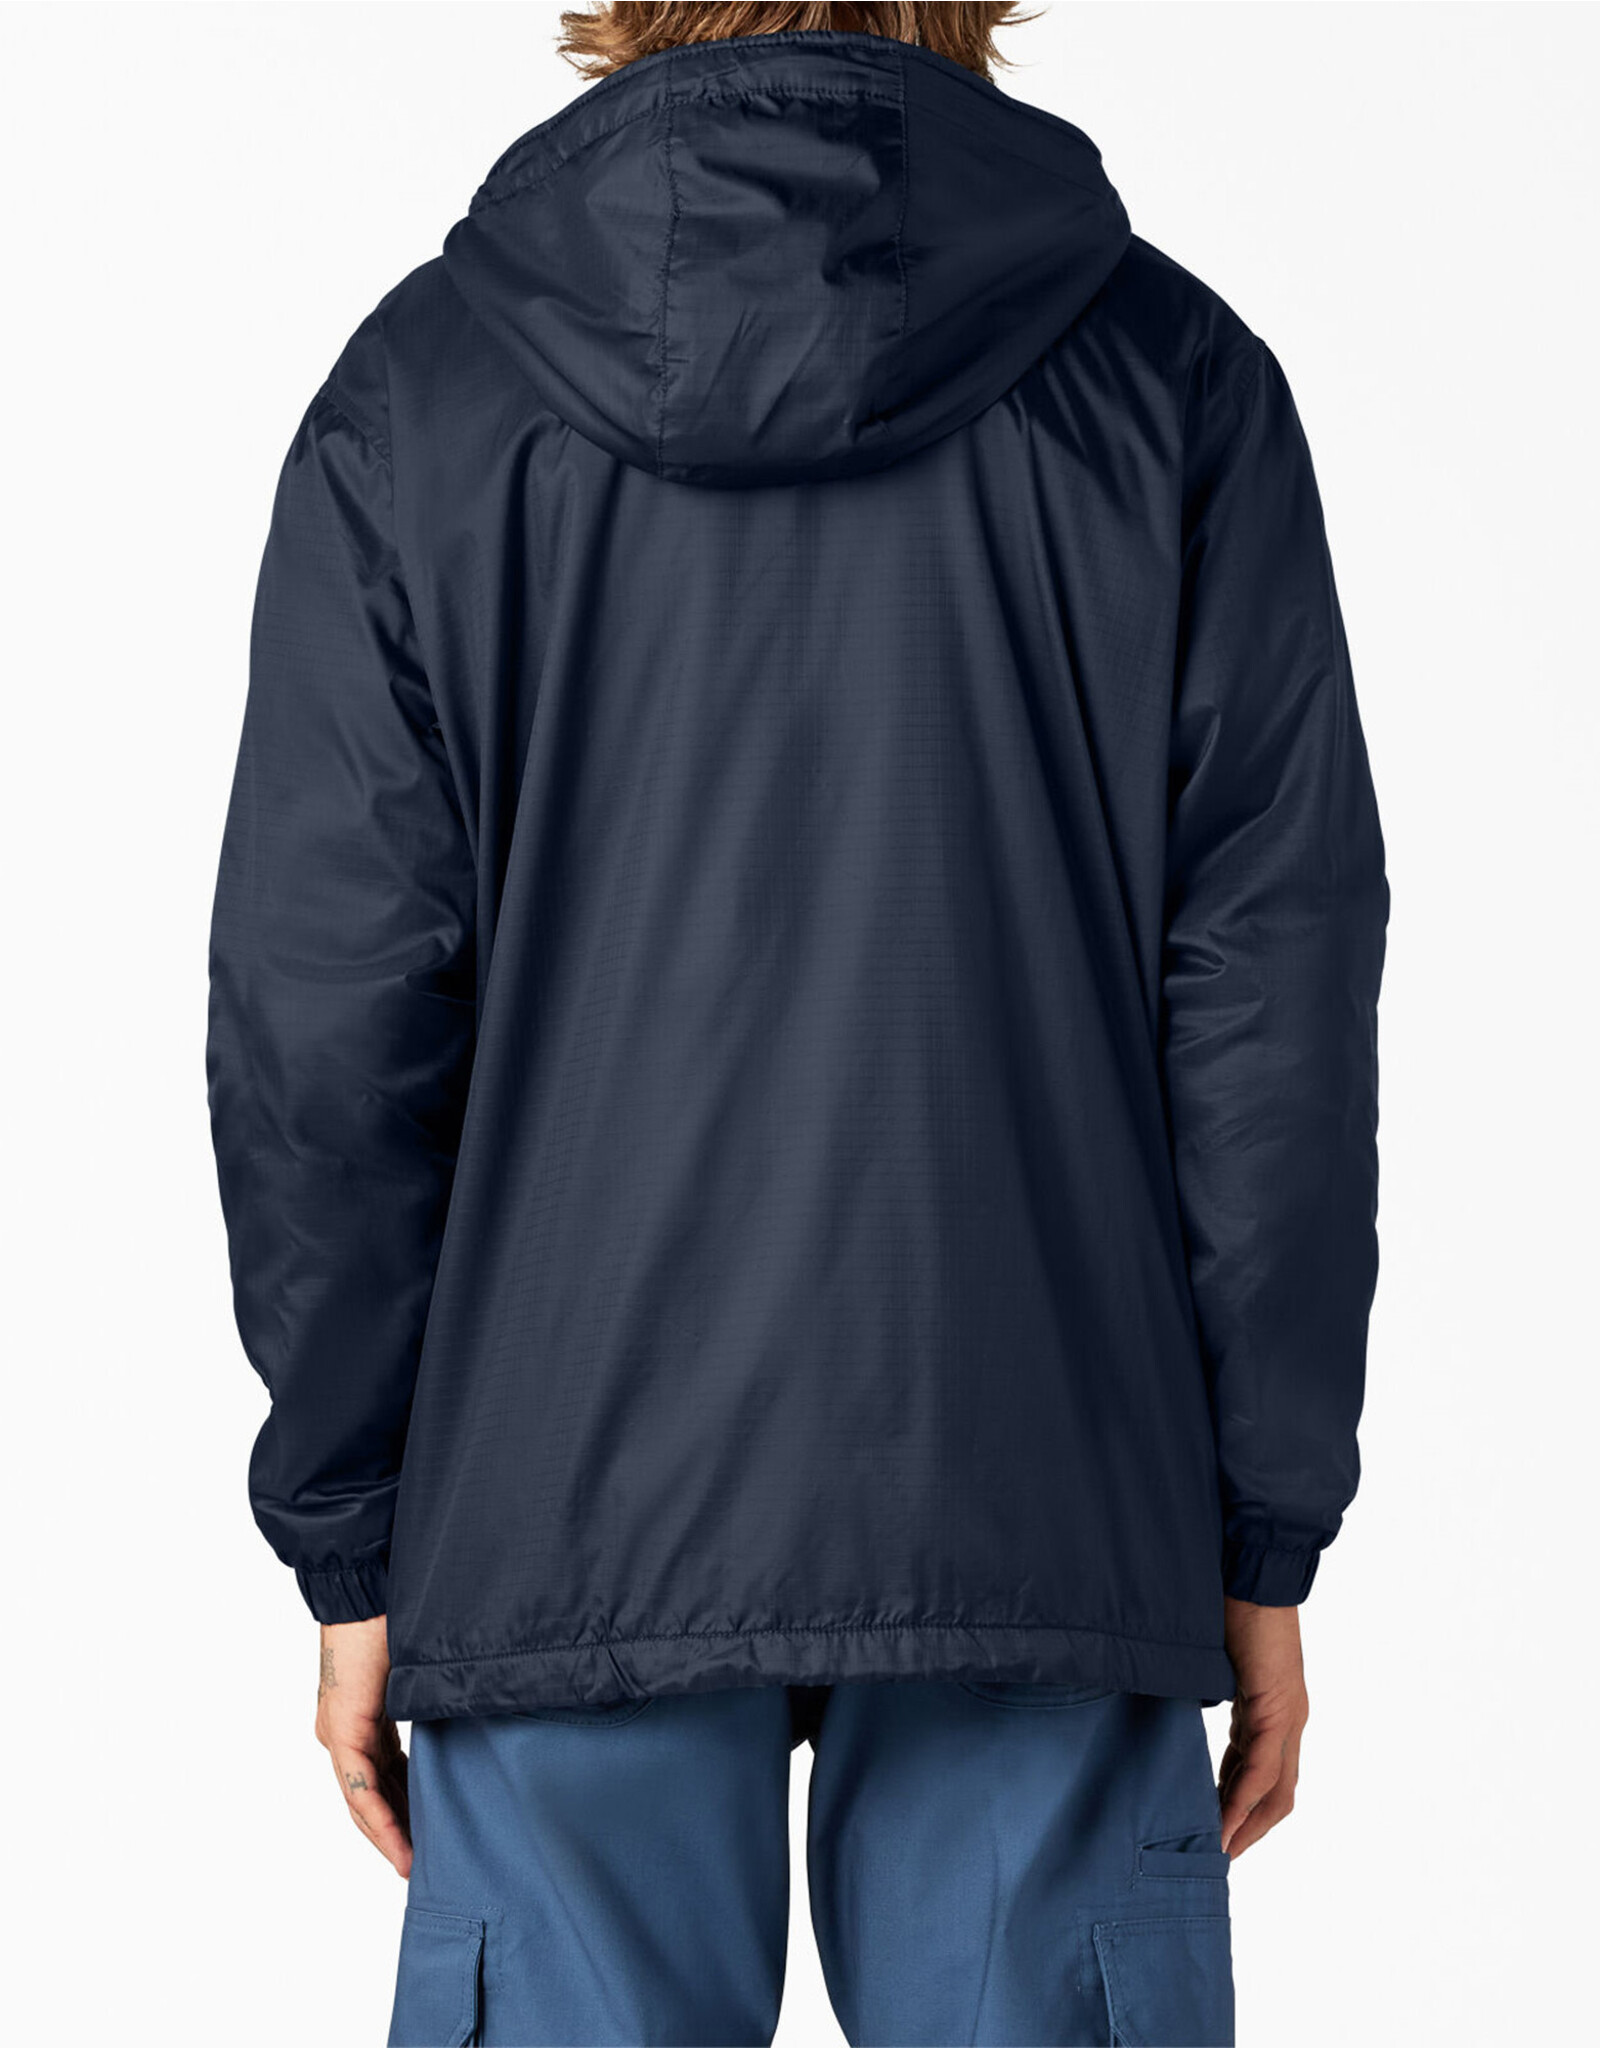 DICKIES Fleece Lined Hooded Nylon Jacket Black - 33237BK